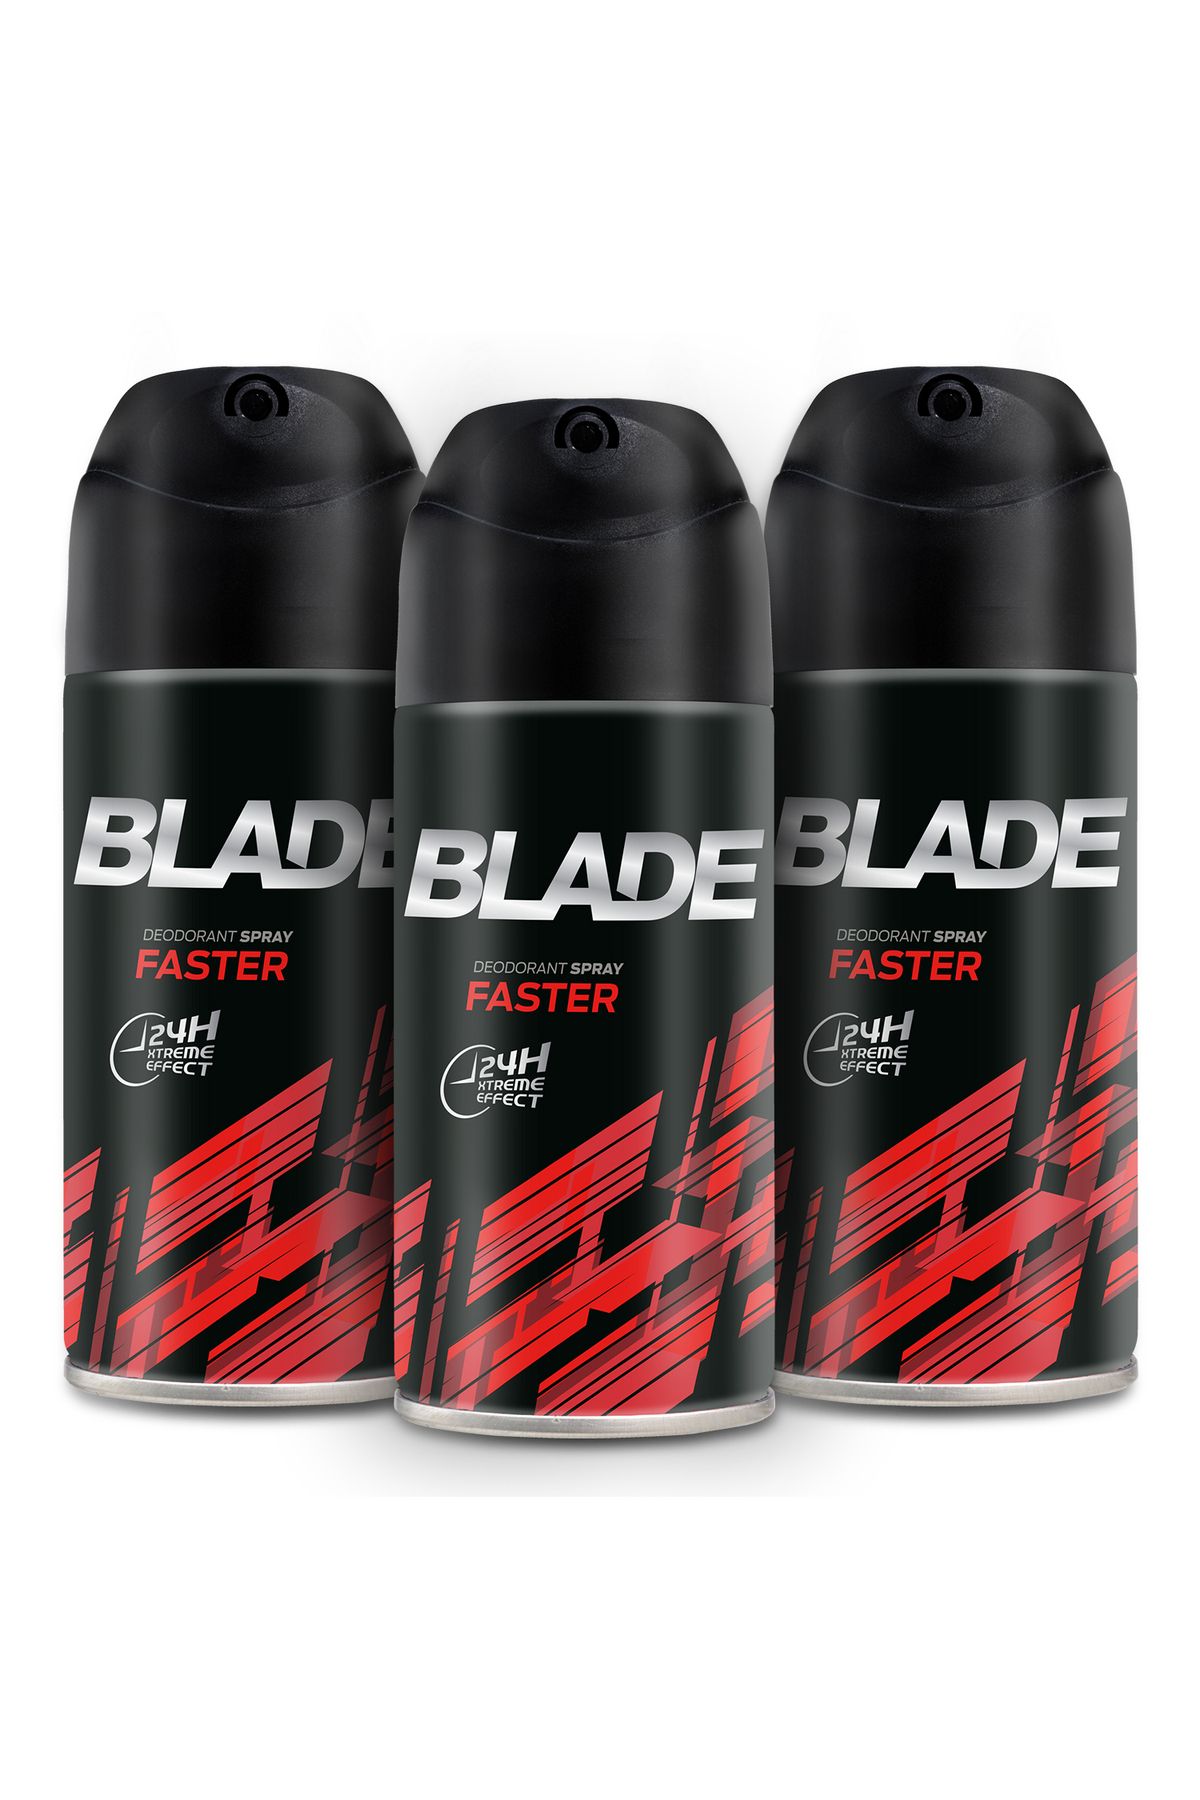 Blade Faster Erkek Deodorant 3x150ml